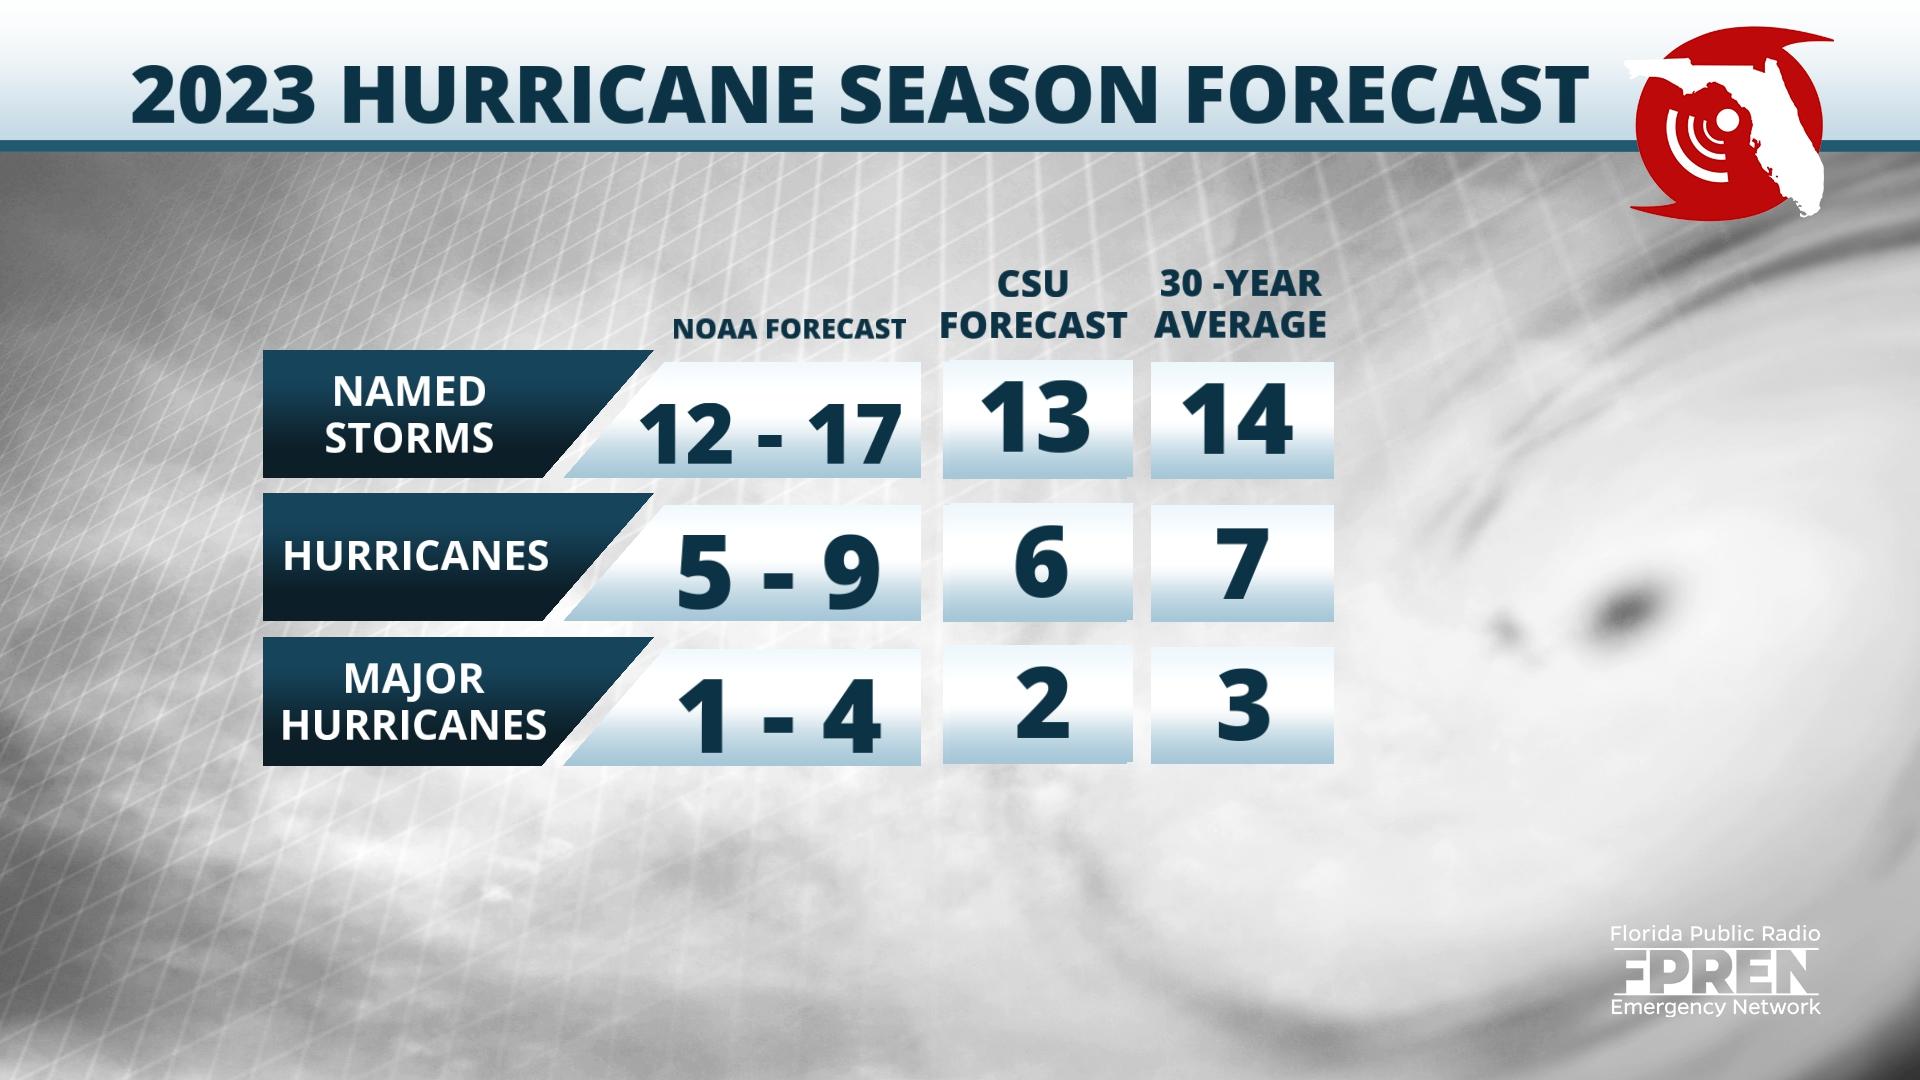 Featured image for “National Hurricane Center predicts near average hurricane season”